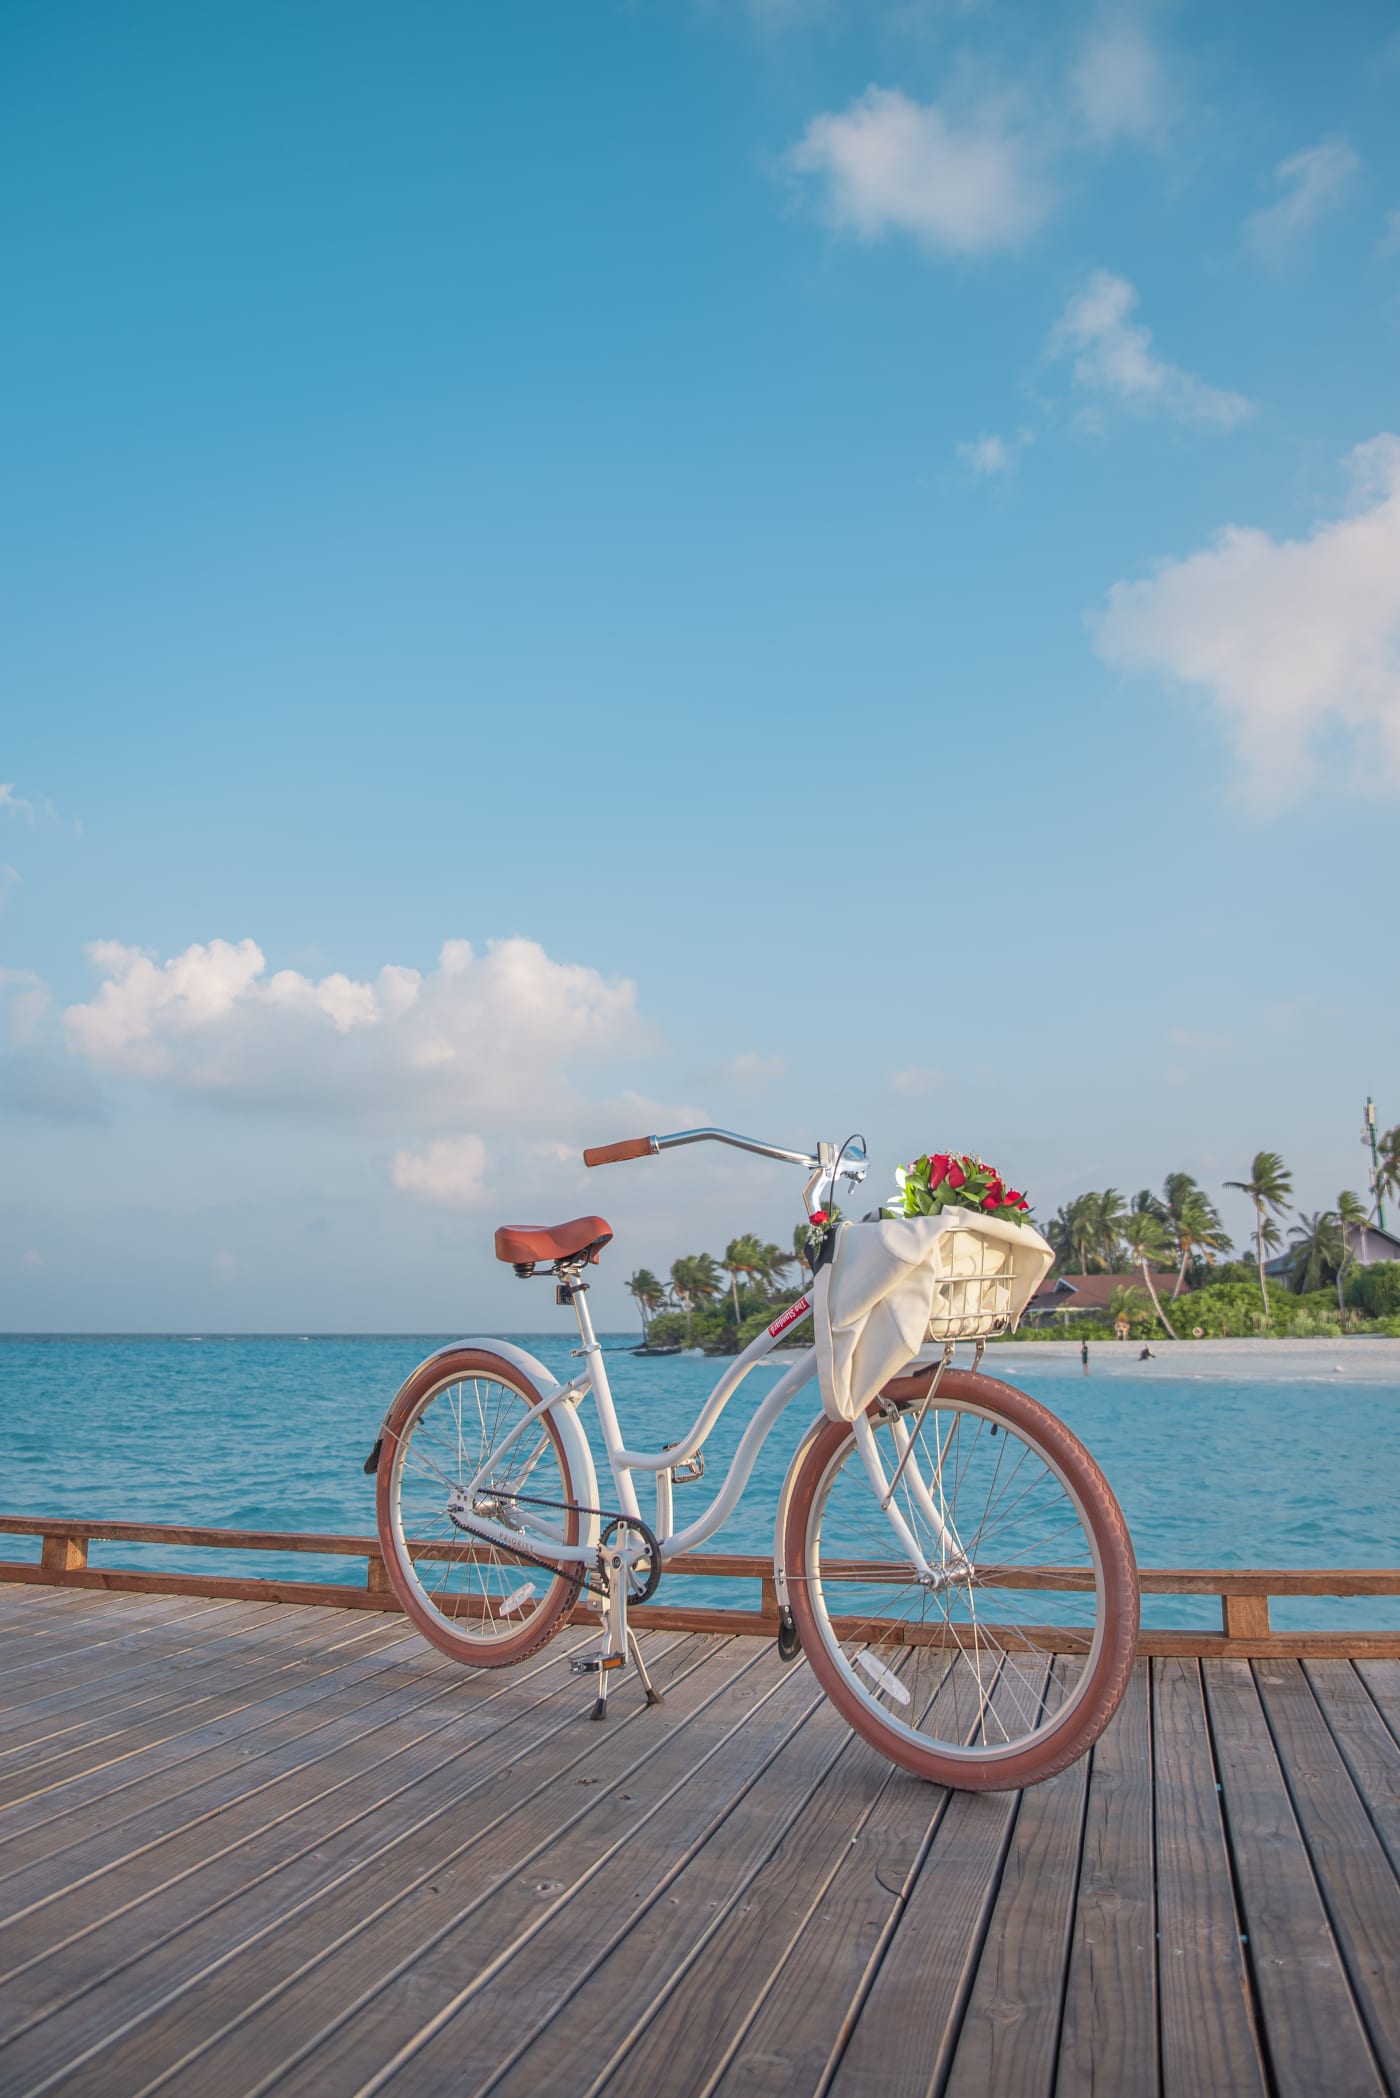 Bicycle with basket along seaside